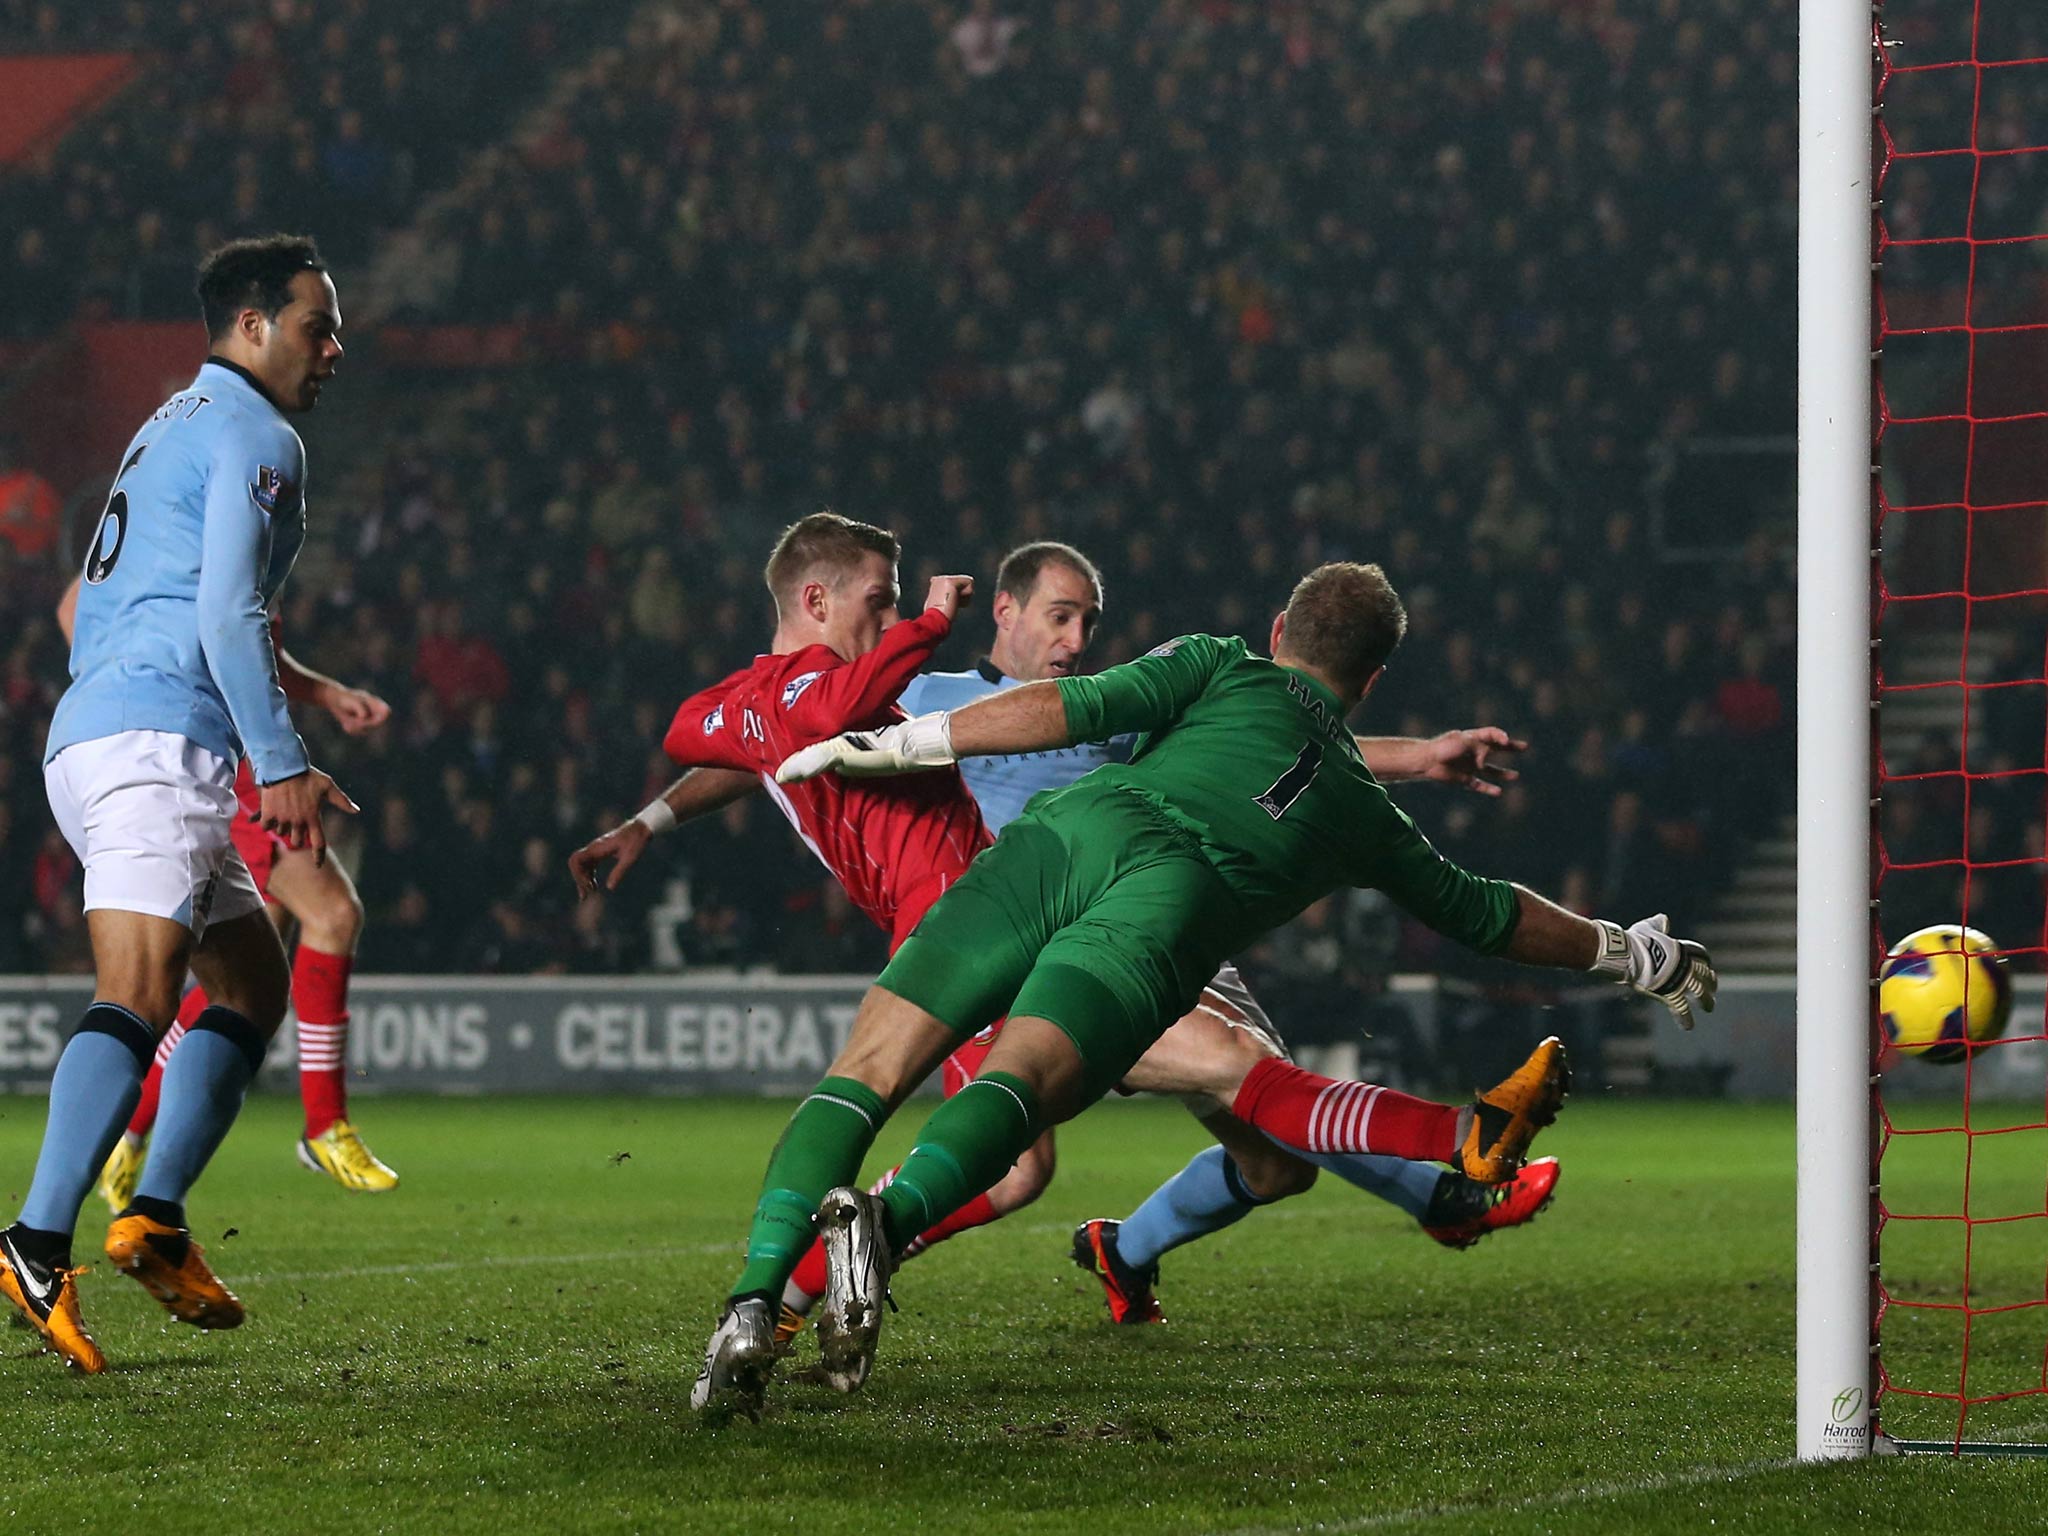 Southampton midfielder Steven Davis finds the back of the net against Manchester City